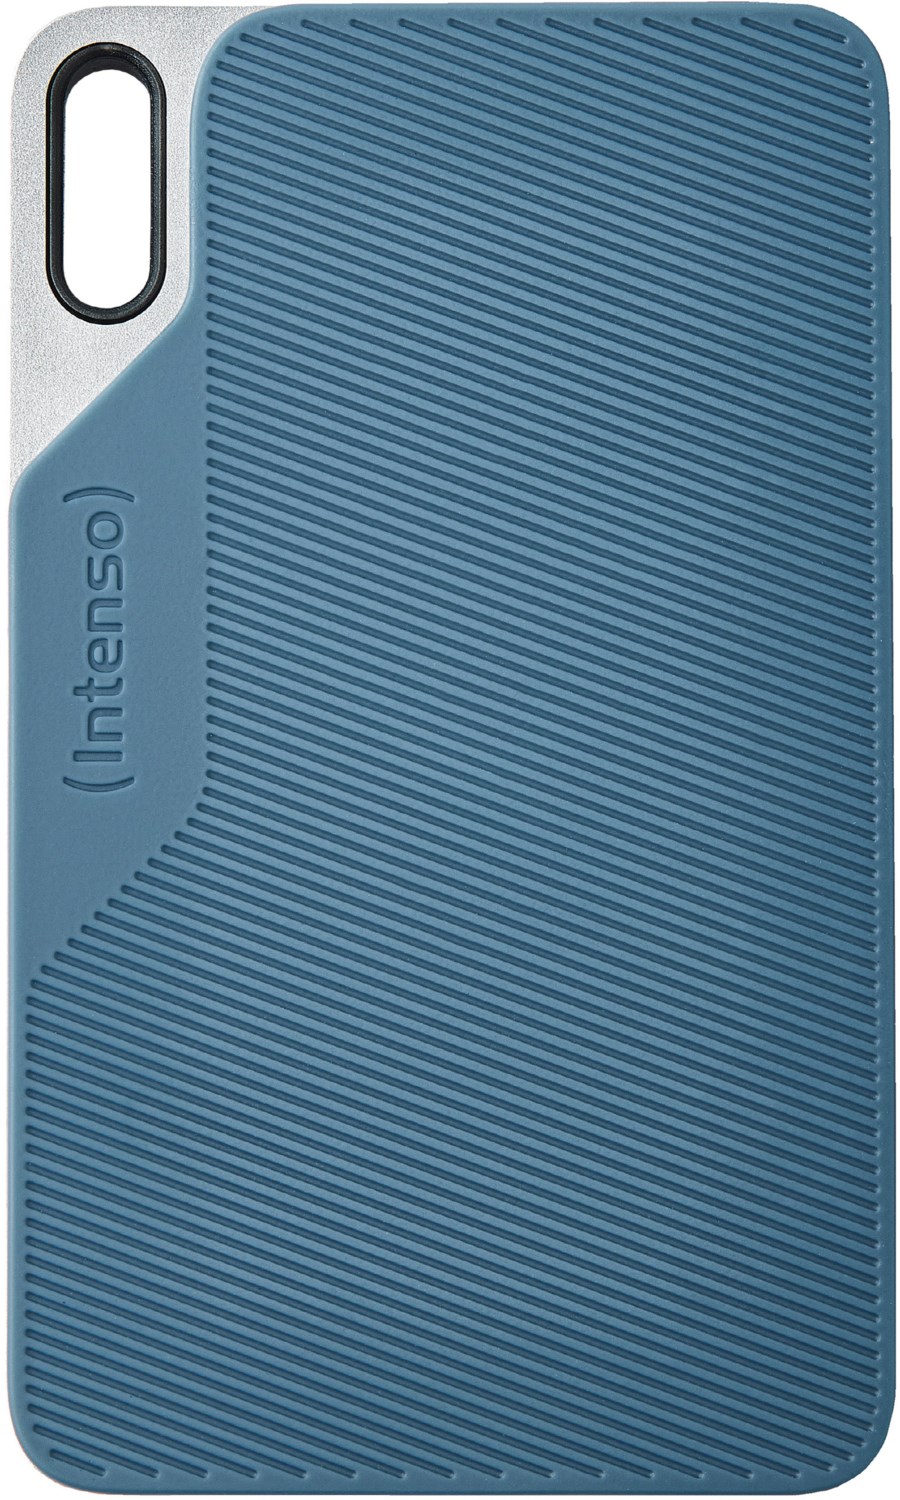 TX100 USB 3.2 Gen 1 (250GB) Externe SSD grau-blau von Intenso